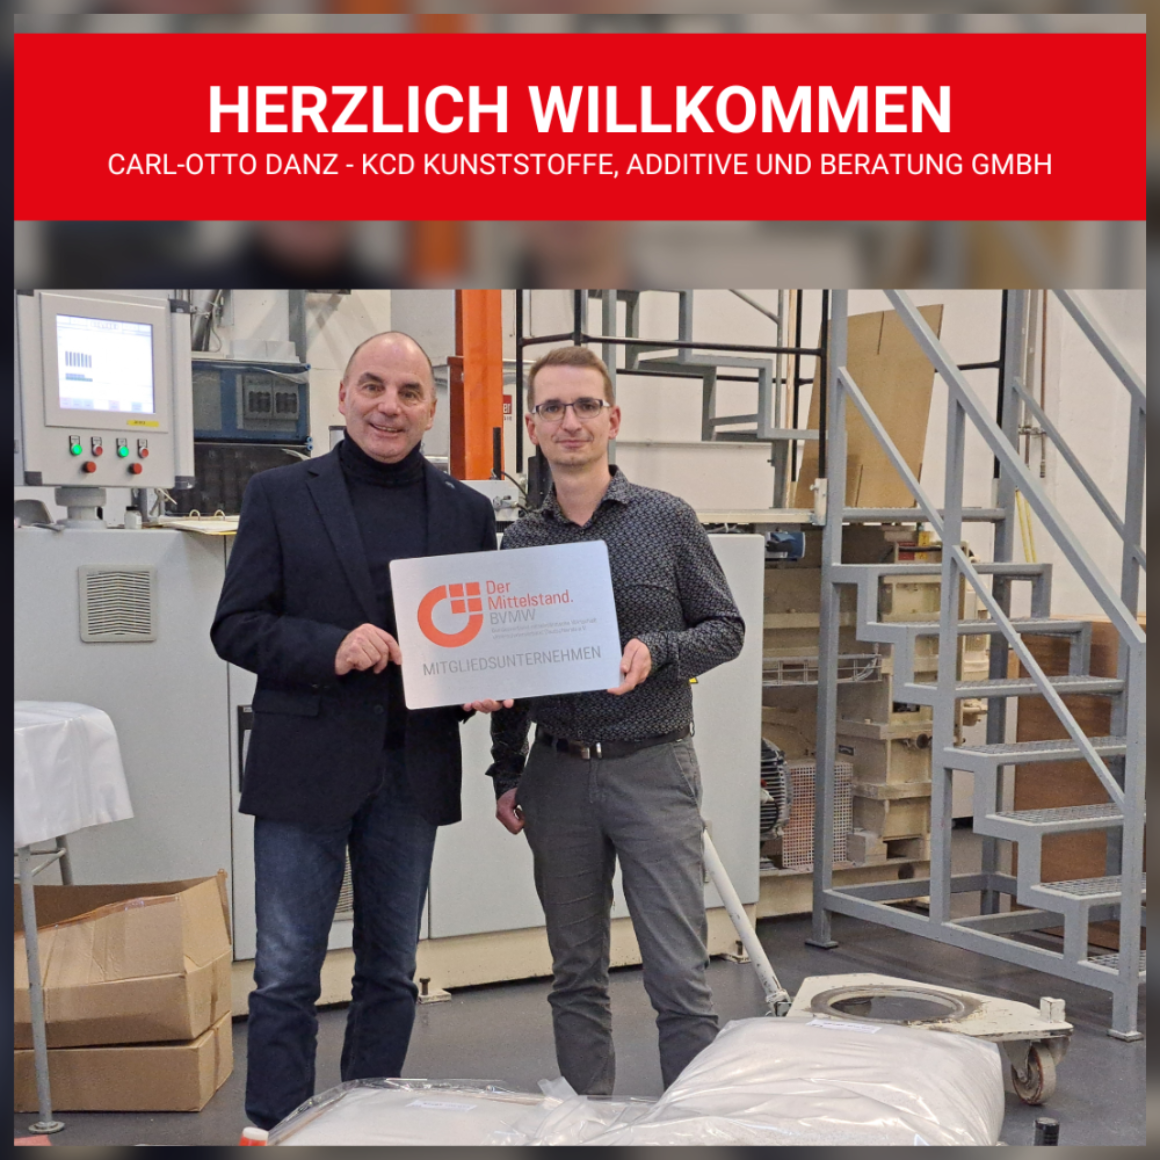 HW kcd Kunststoffe Additive und Beratung GmbH